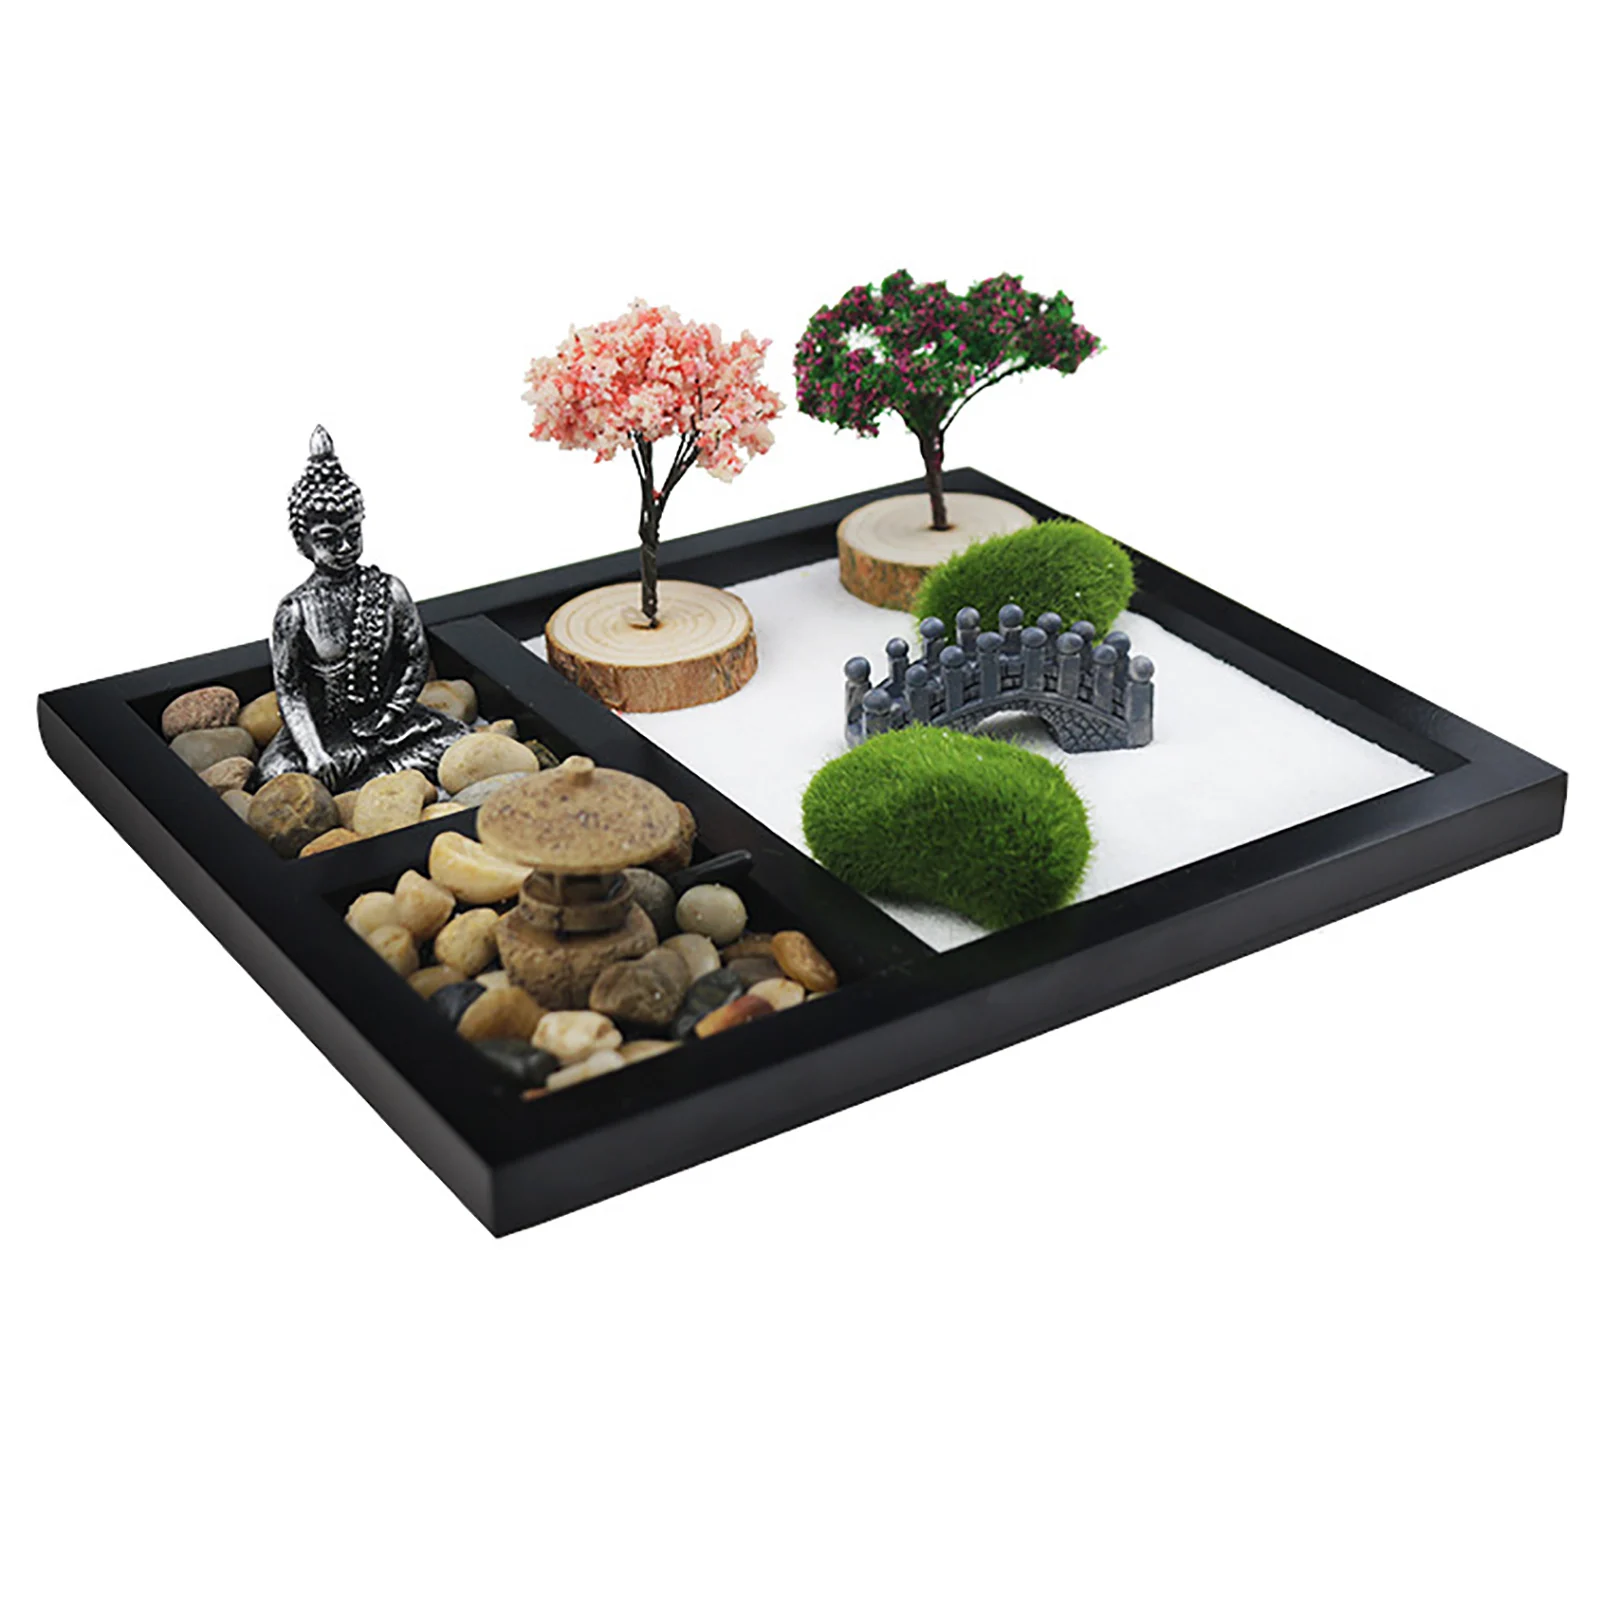 Zen Garden Kit meditation relaxation work home Large MDF Tabletop Zen Garden 